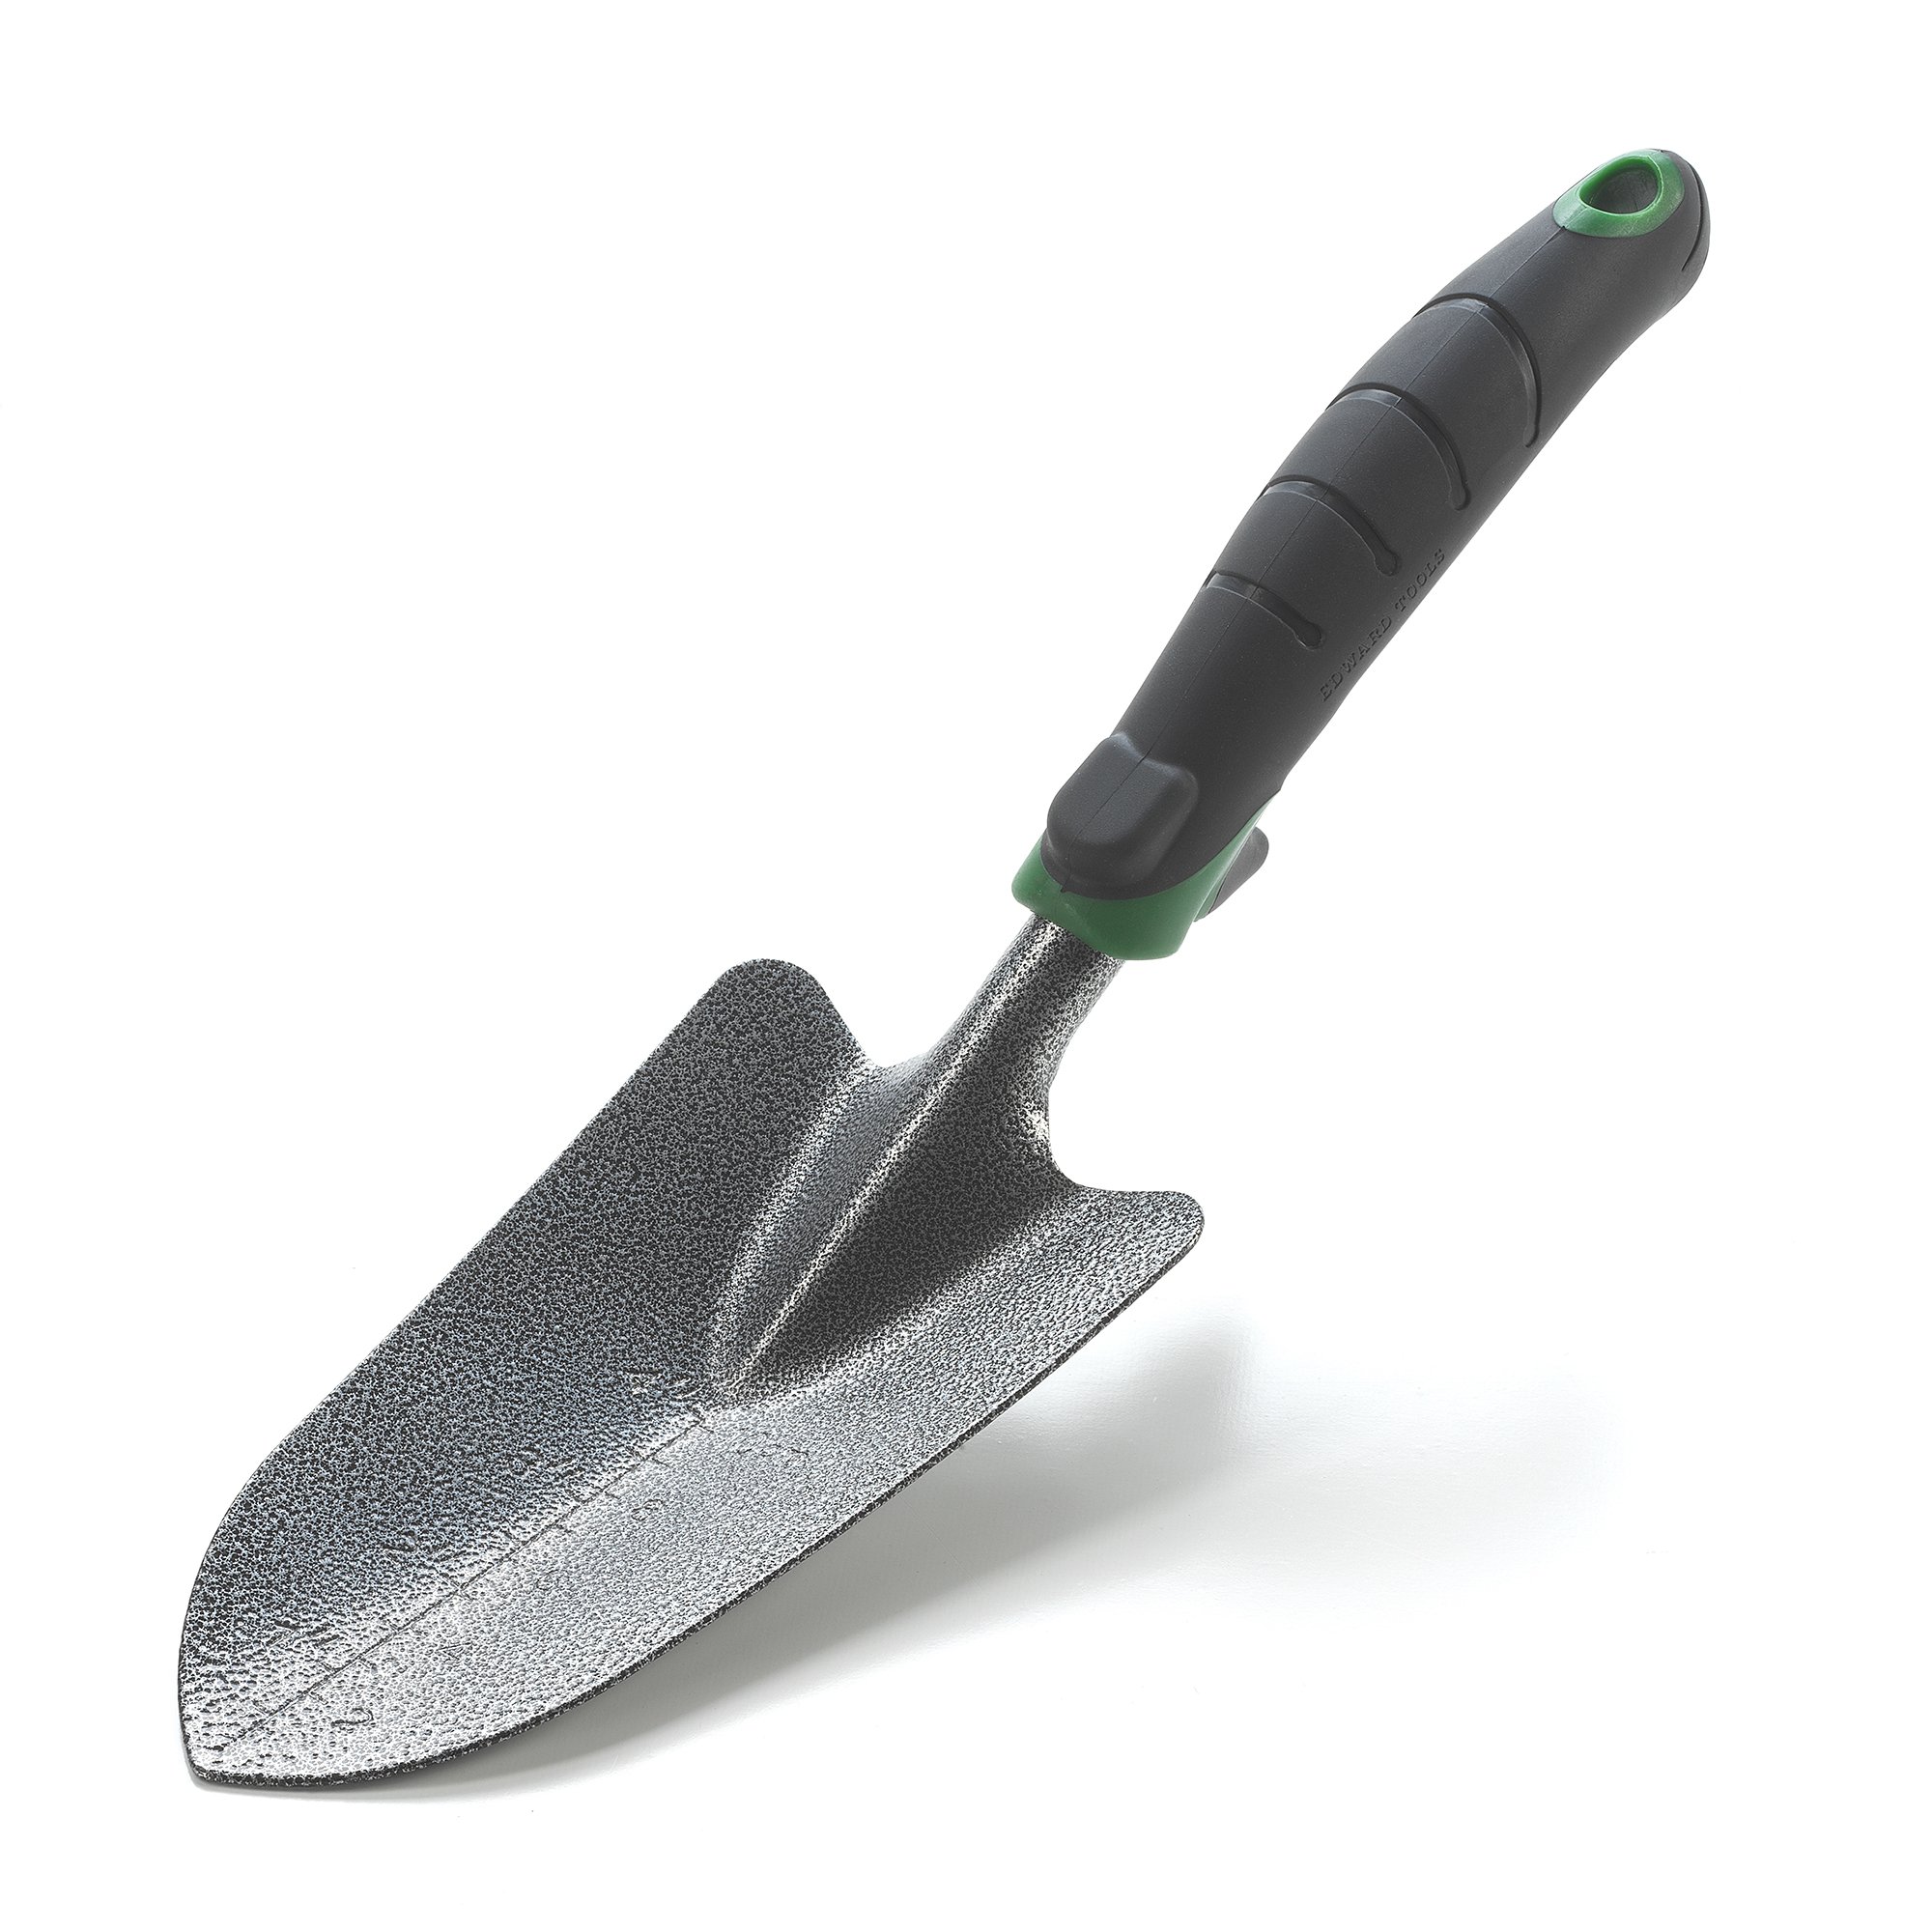 NEW Rubber Handle Stainless Steel Hand Garden Trowel Calibration Shovel 